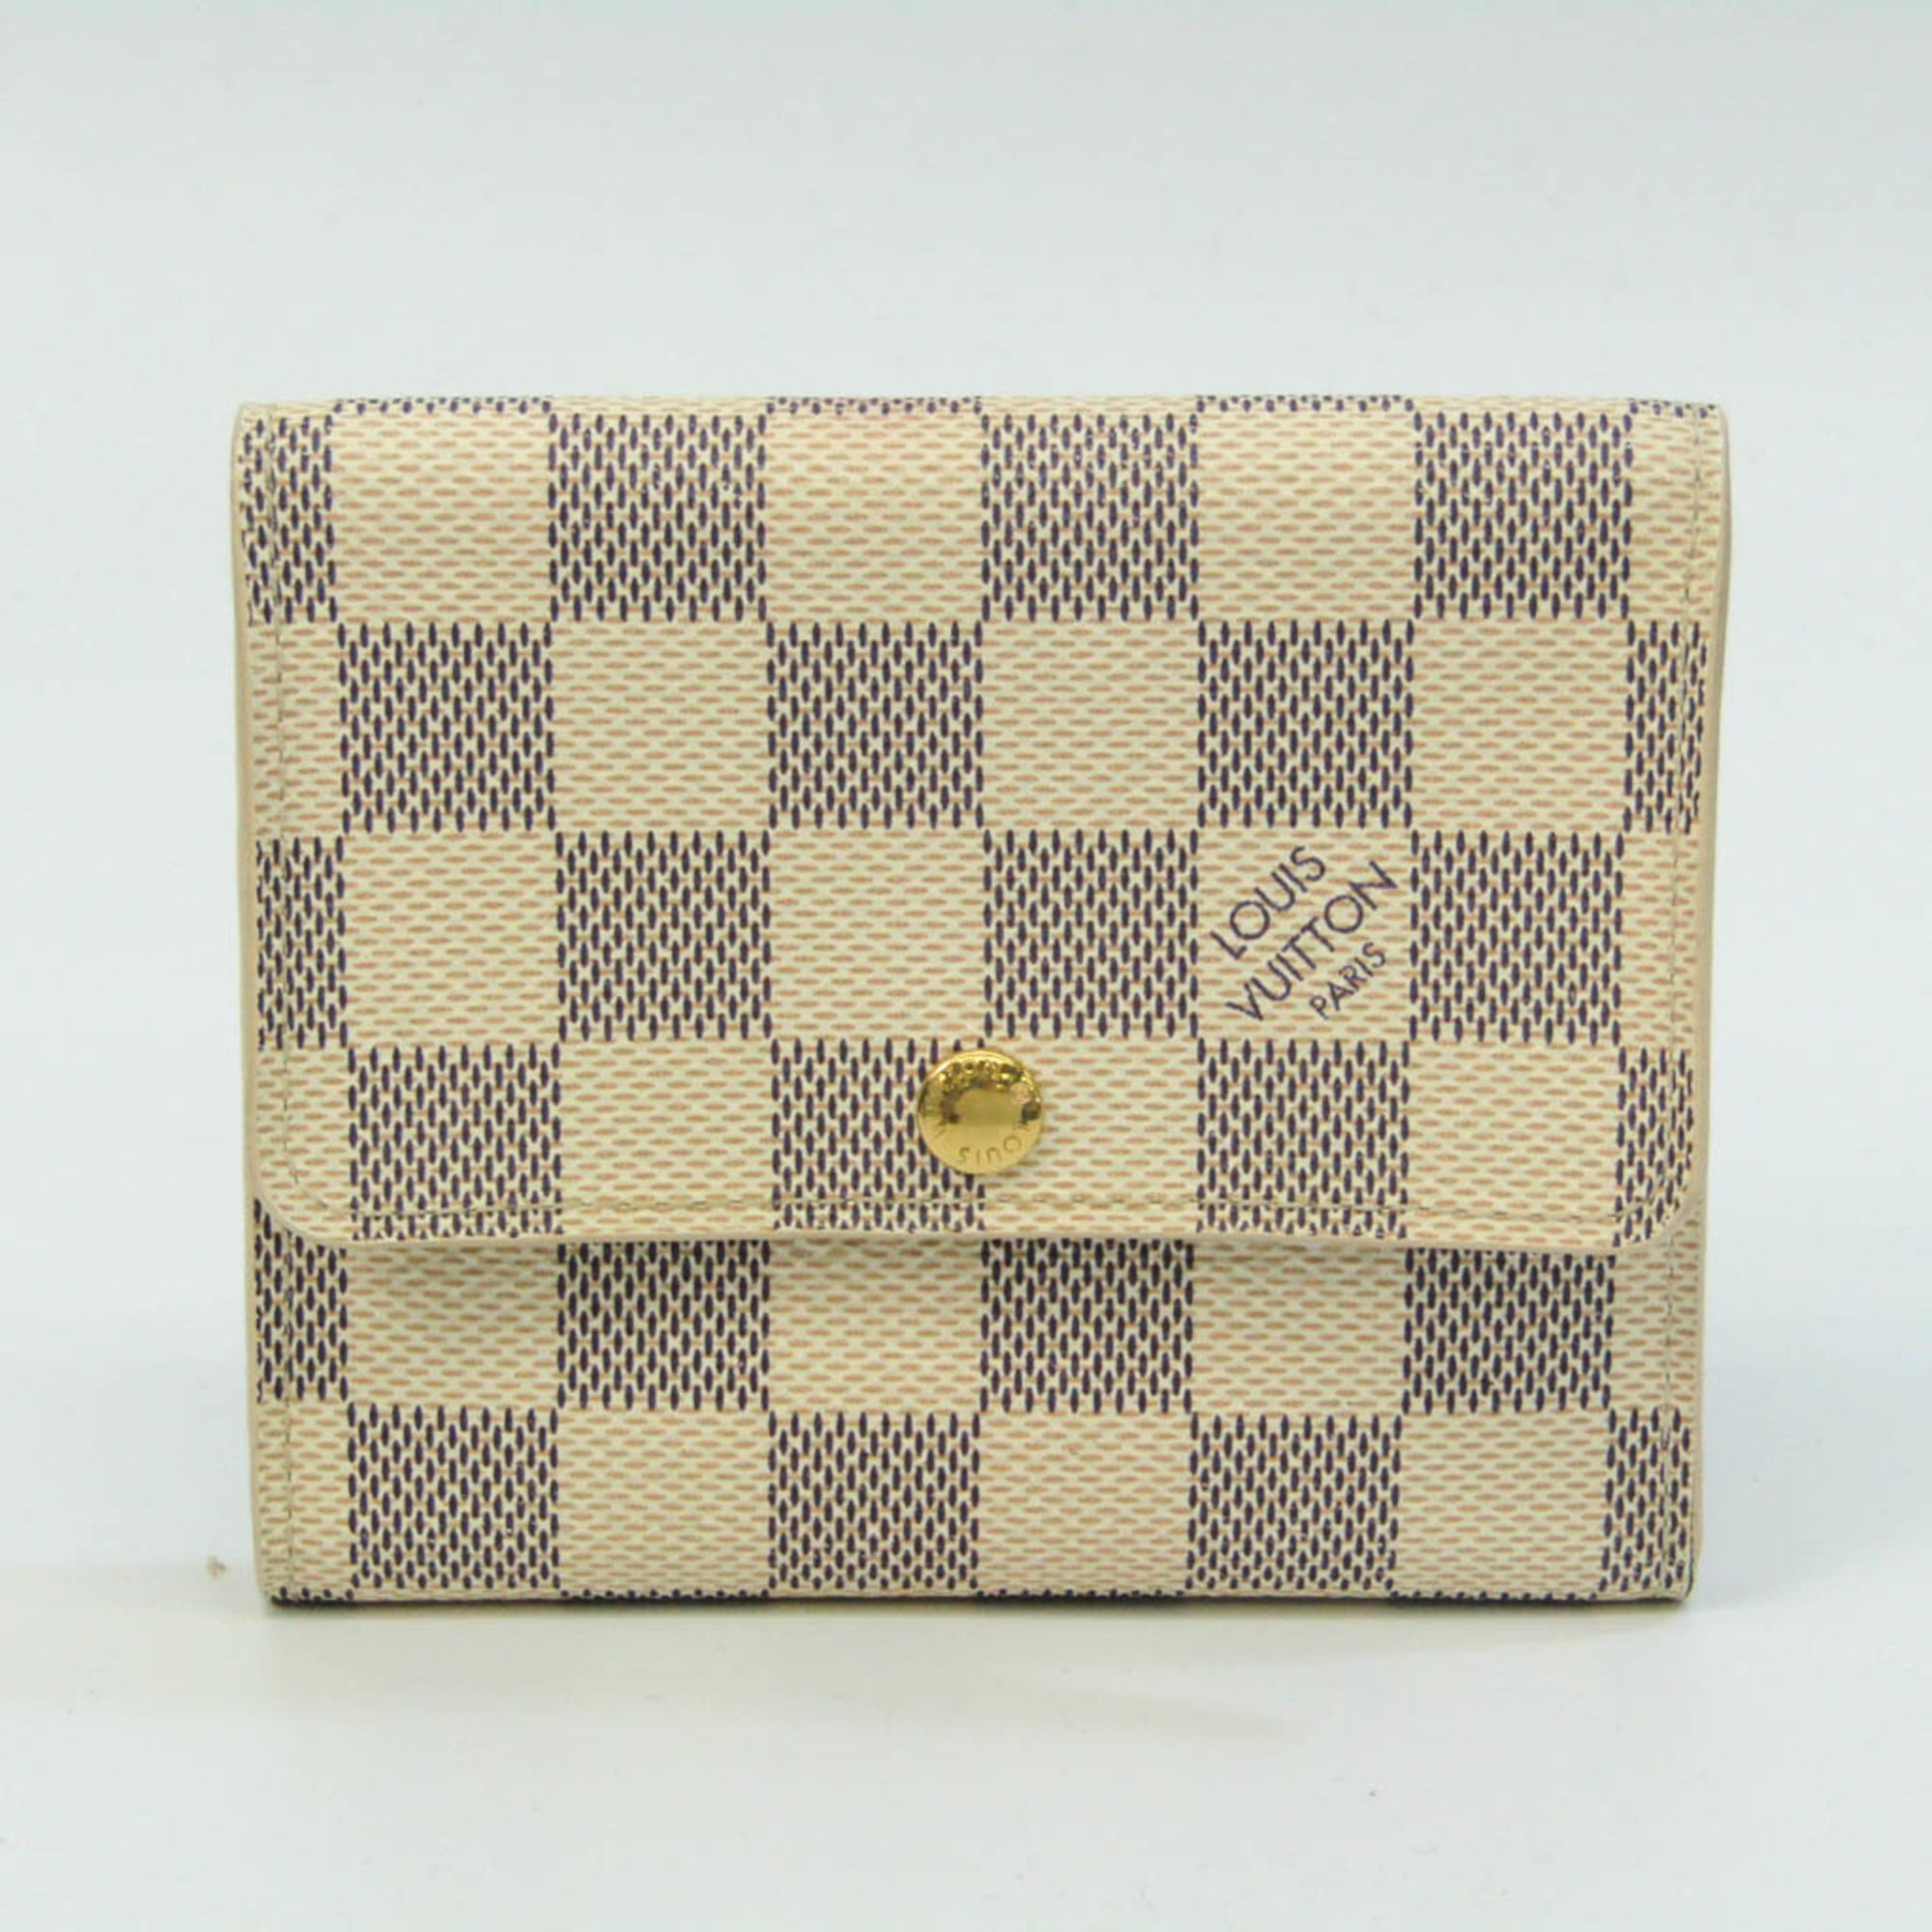 LOUIS VUITTON Louis Vuitton Speedy 40 Handbag Monogram M41522 MB0950